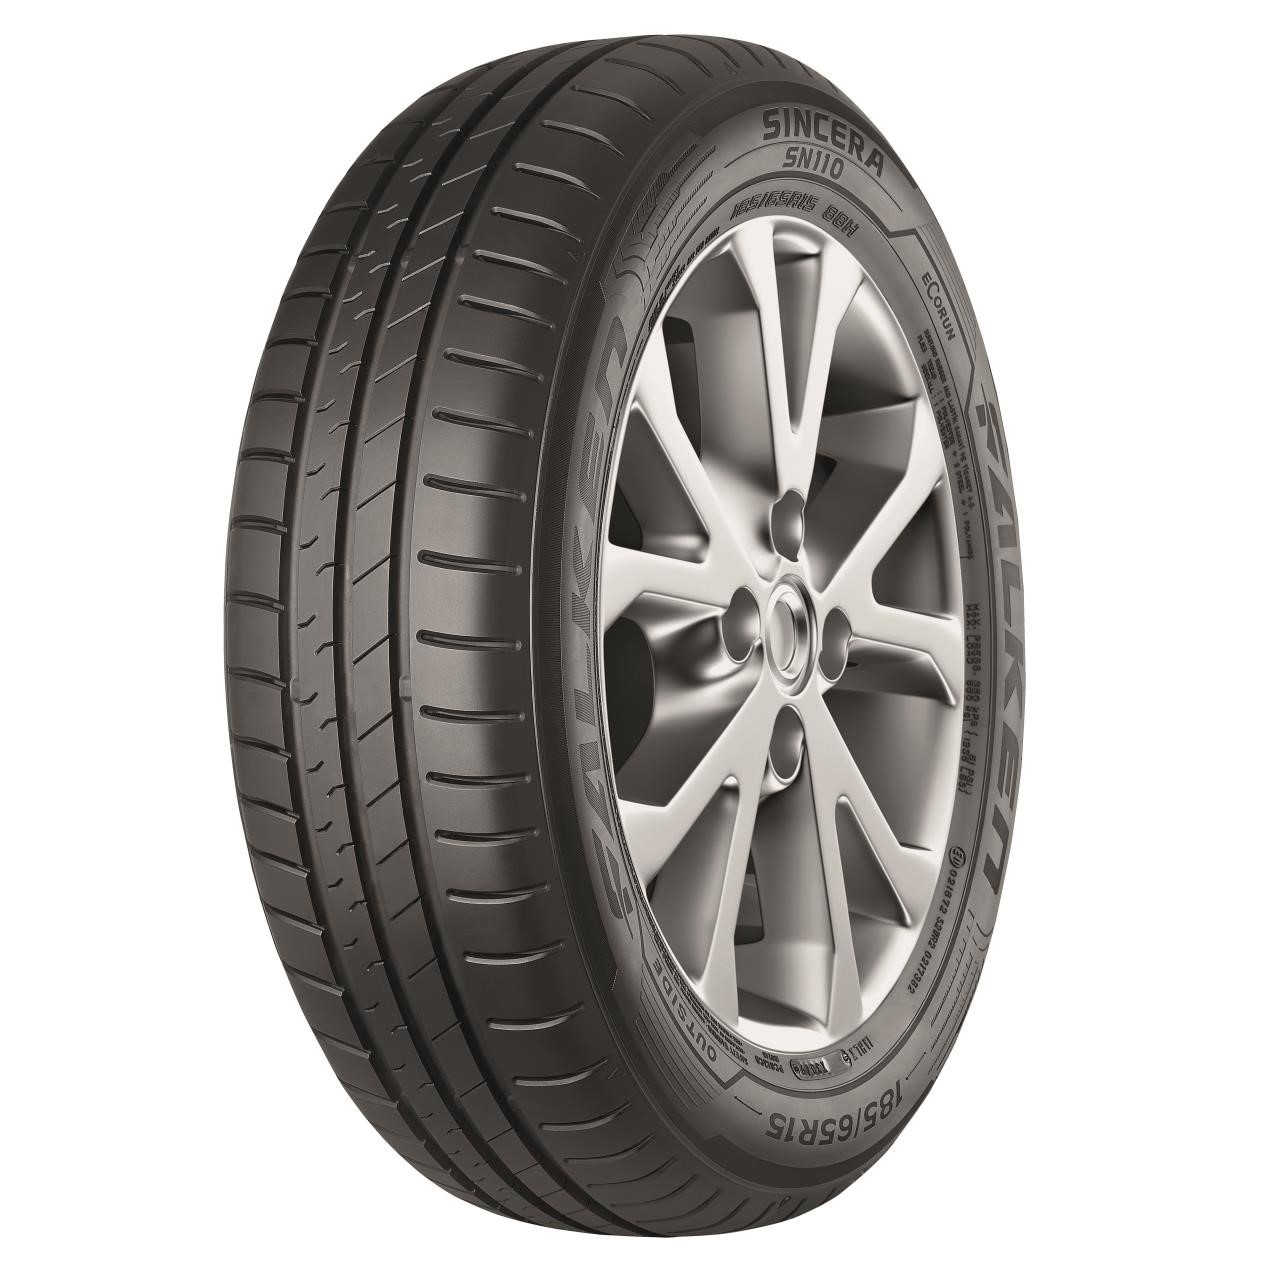 Falken Sincera SN110 Ecorun Tests and Tire - Reviews